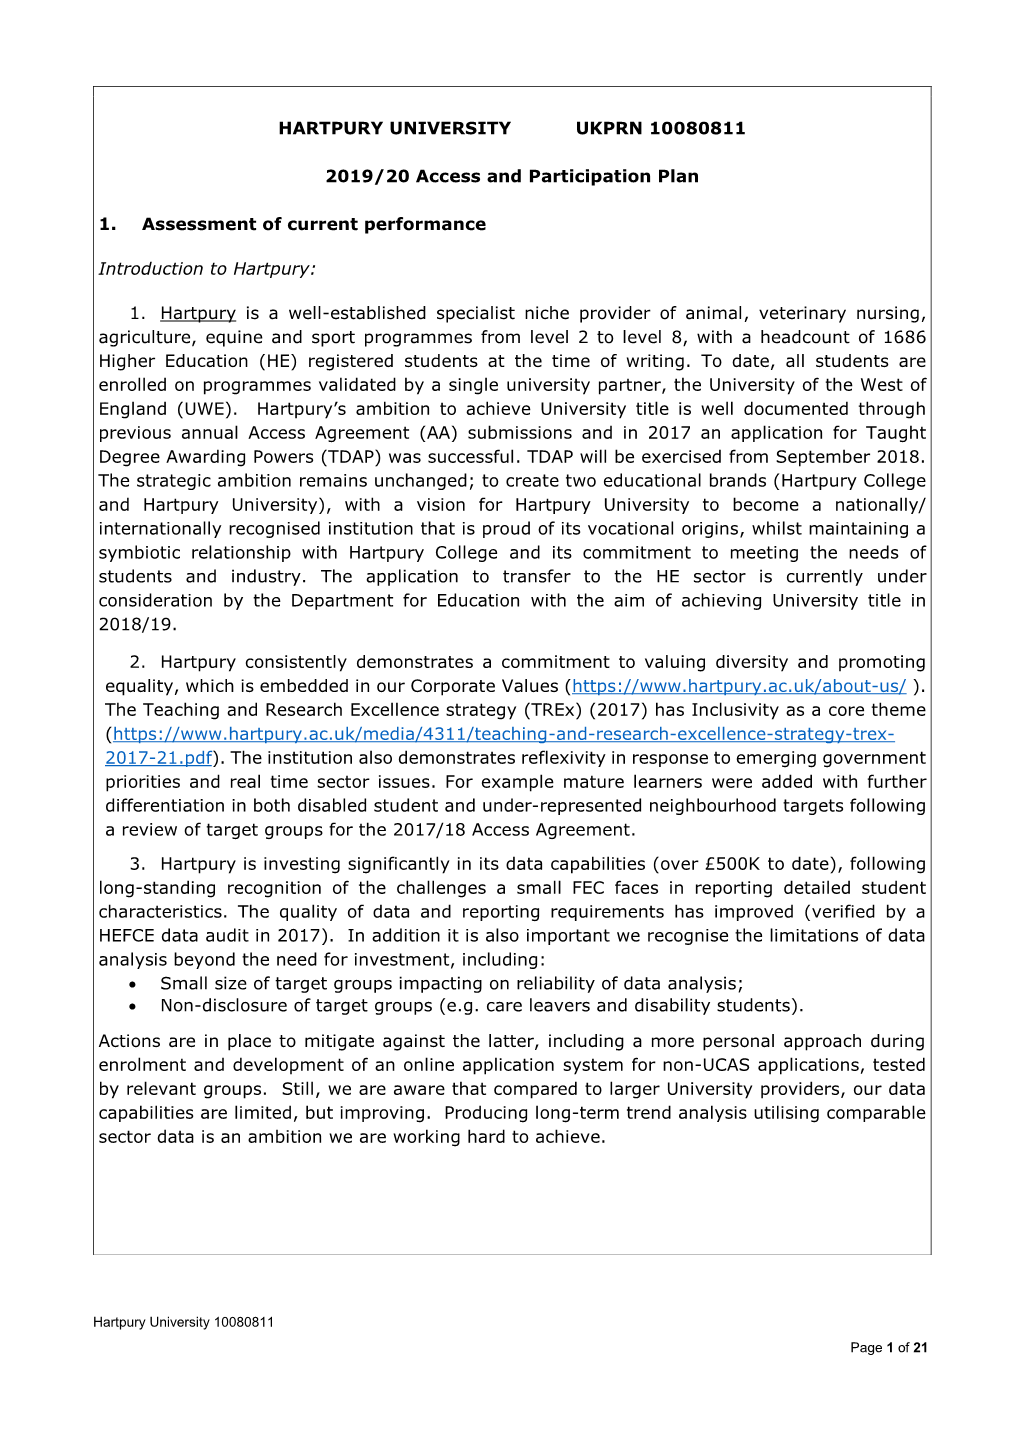 Hartpury University Access and Participation Plan 2019-2020 Pdf Document